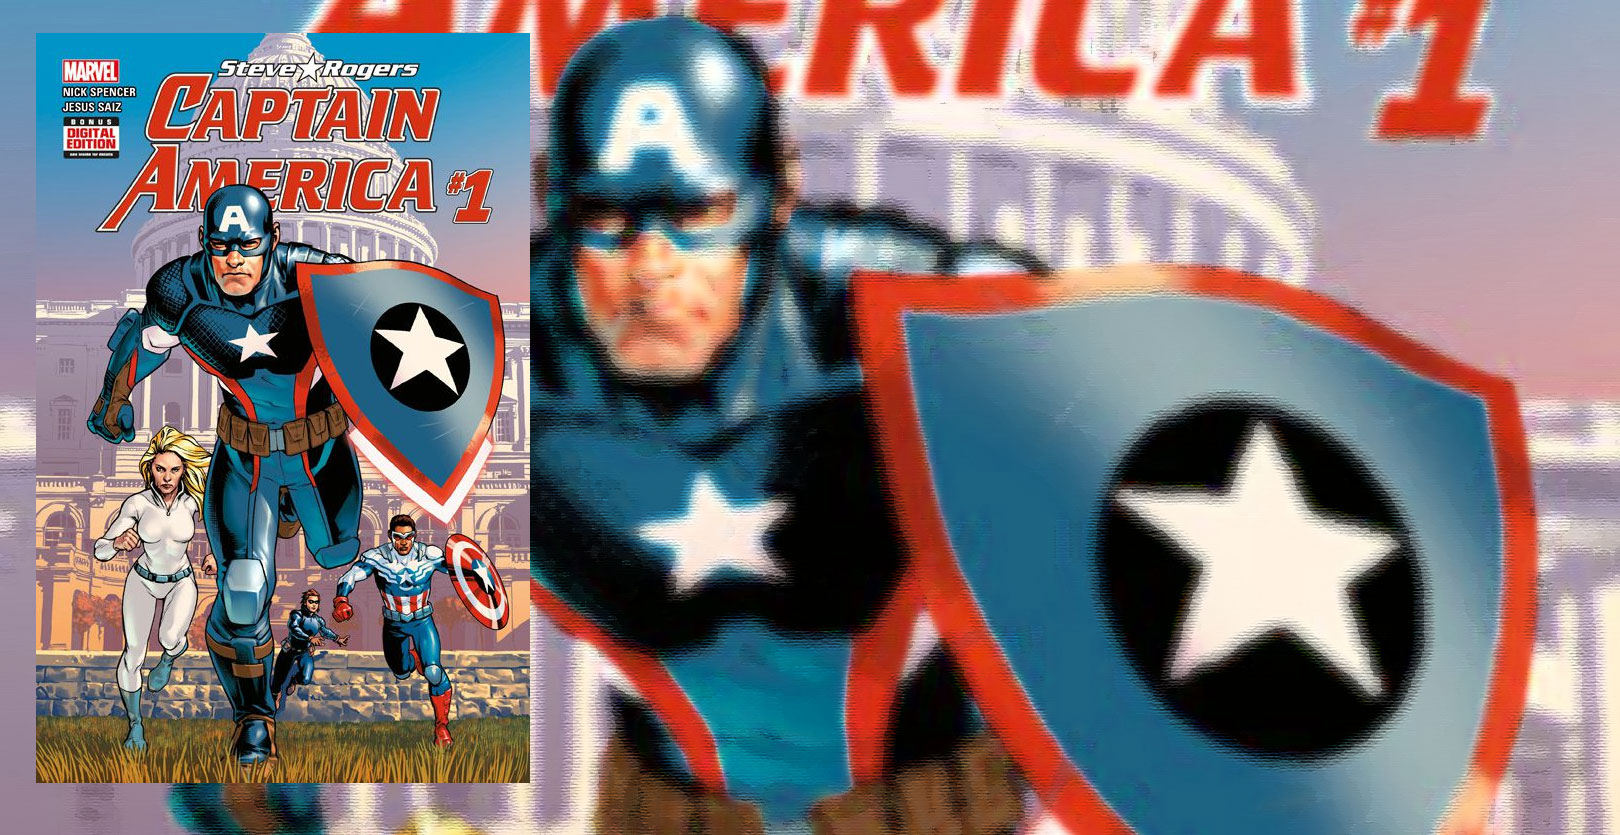 Steve Rogers 7 Comic Panini NEUWARE Captain America deutsch